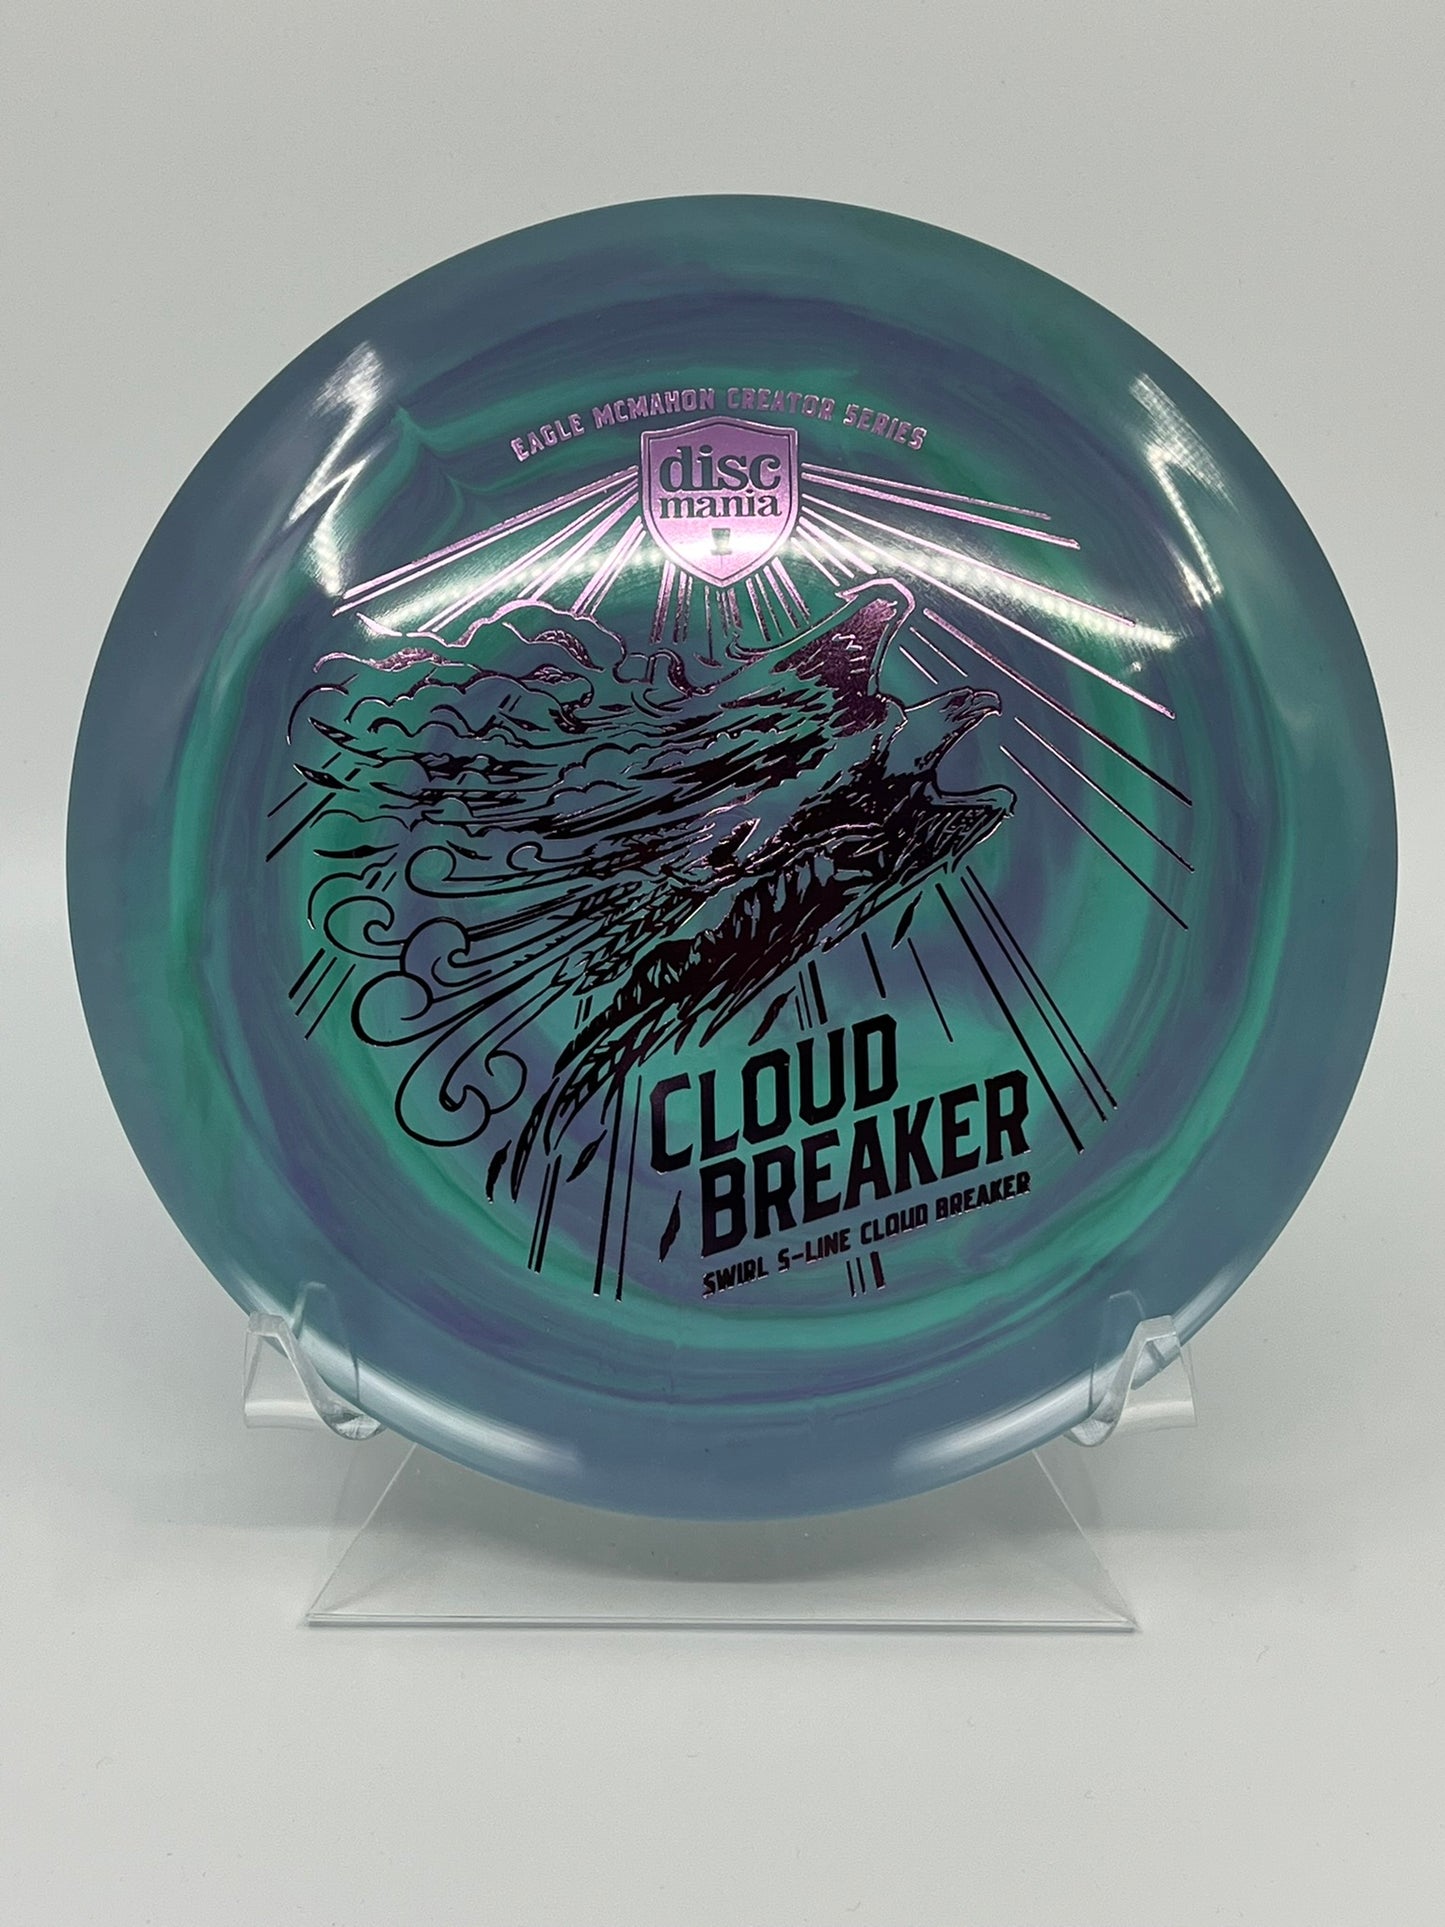 Discmania Eagle McMahon Creator Series Swirl S-Line Cloud Breaker